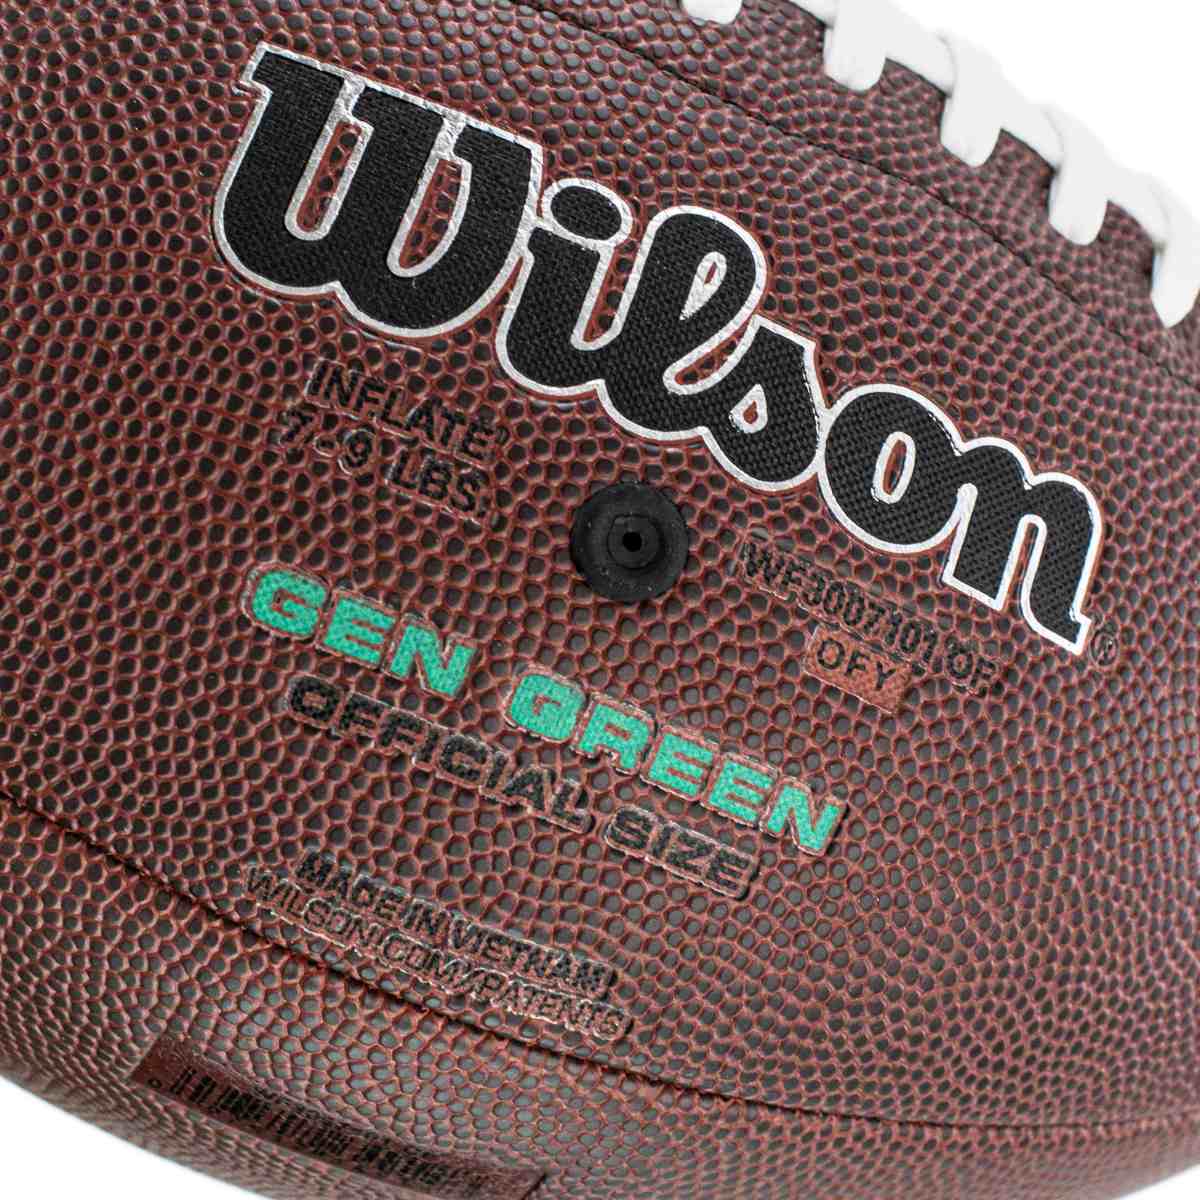 Wilson NFL Stride Pro Eco American Football Size 9 Original Size WF3007101XBOF-